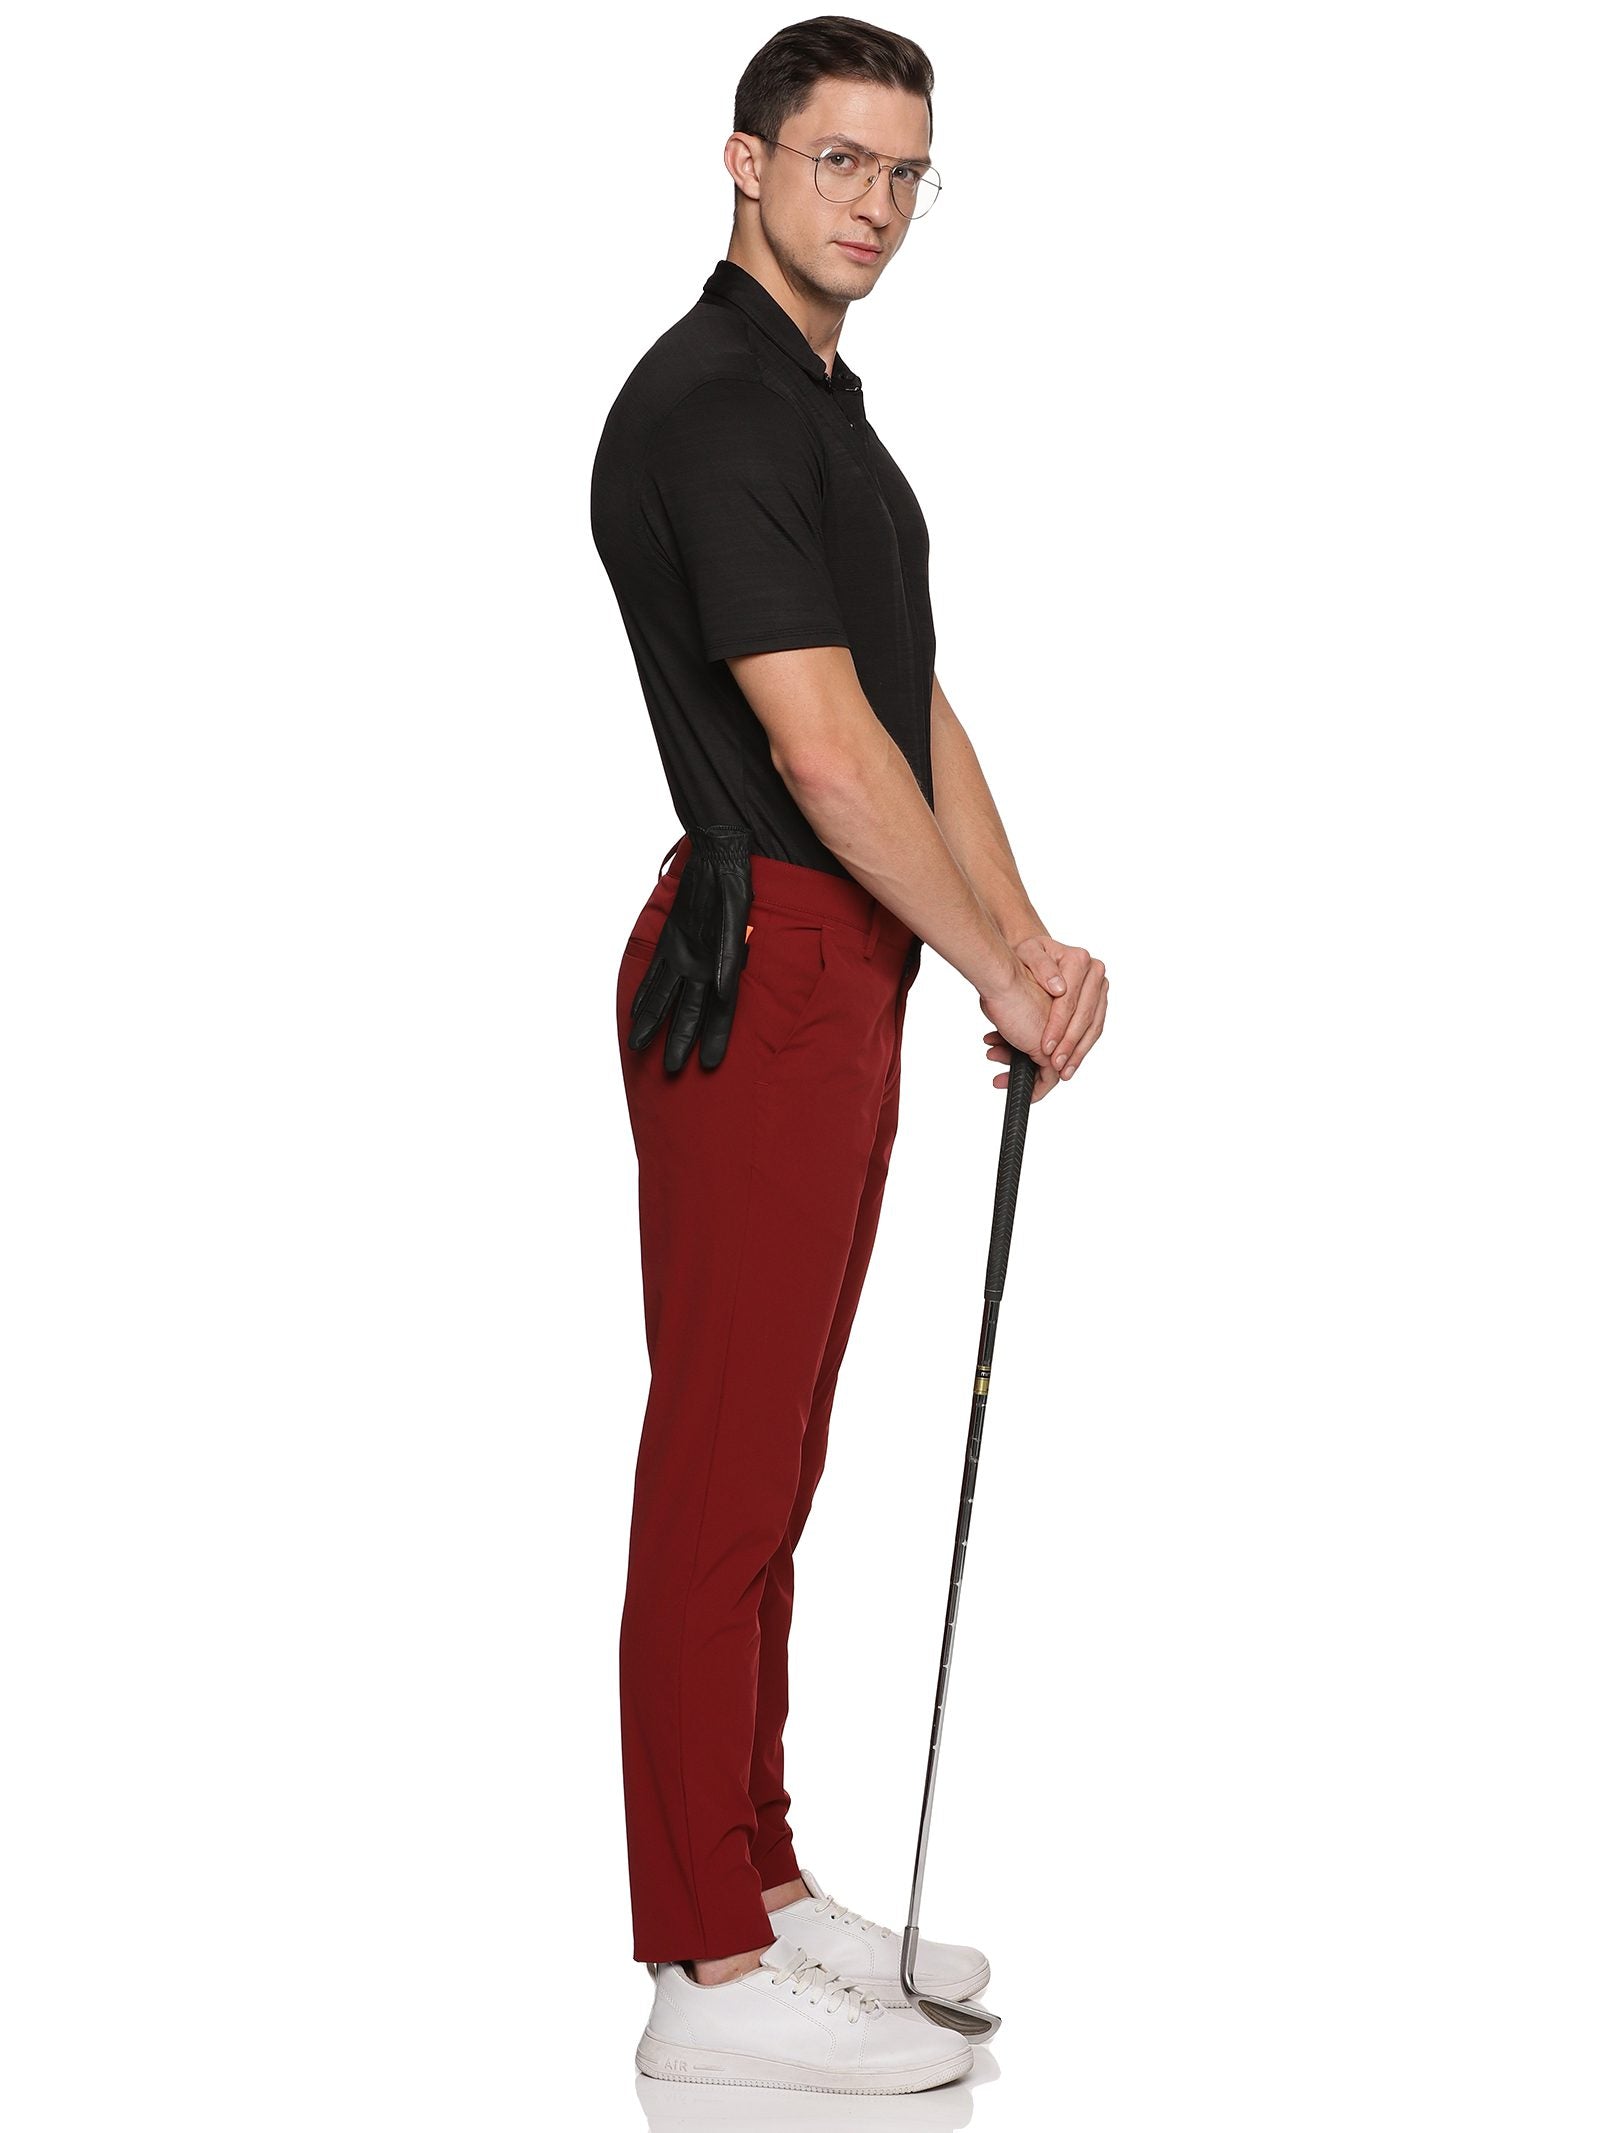 Styzen Men’s Active Golf Trousers (Flexi-Waist)